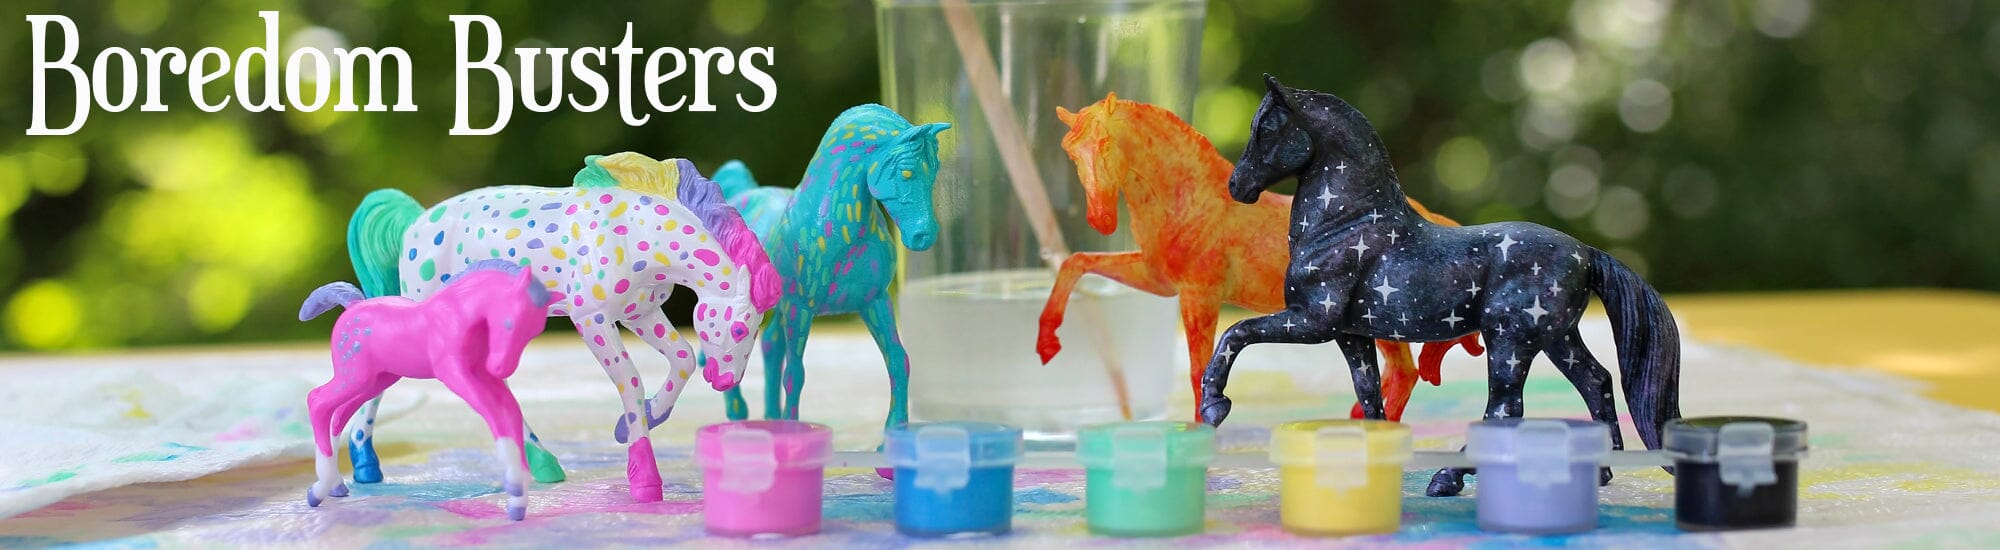 Suncatcher Unicorn Paint & Play - C